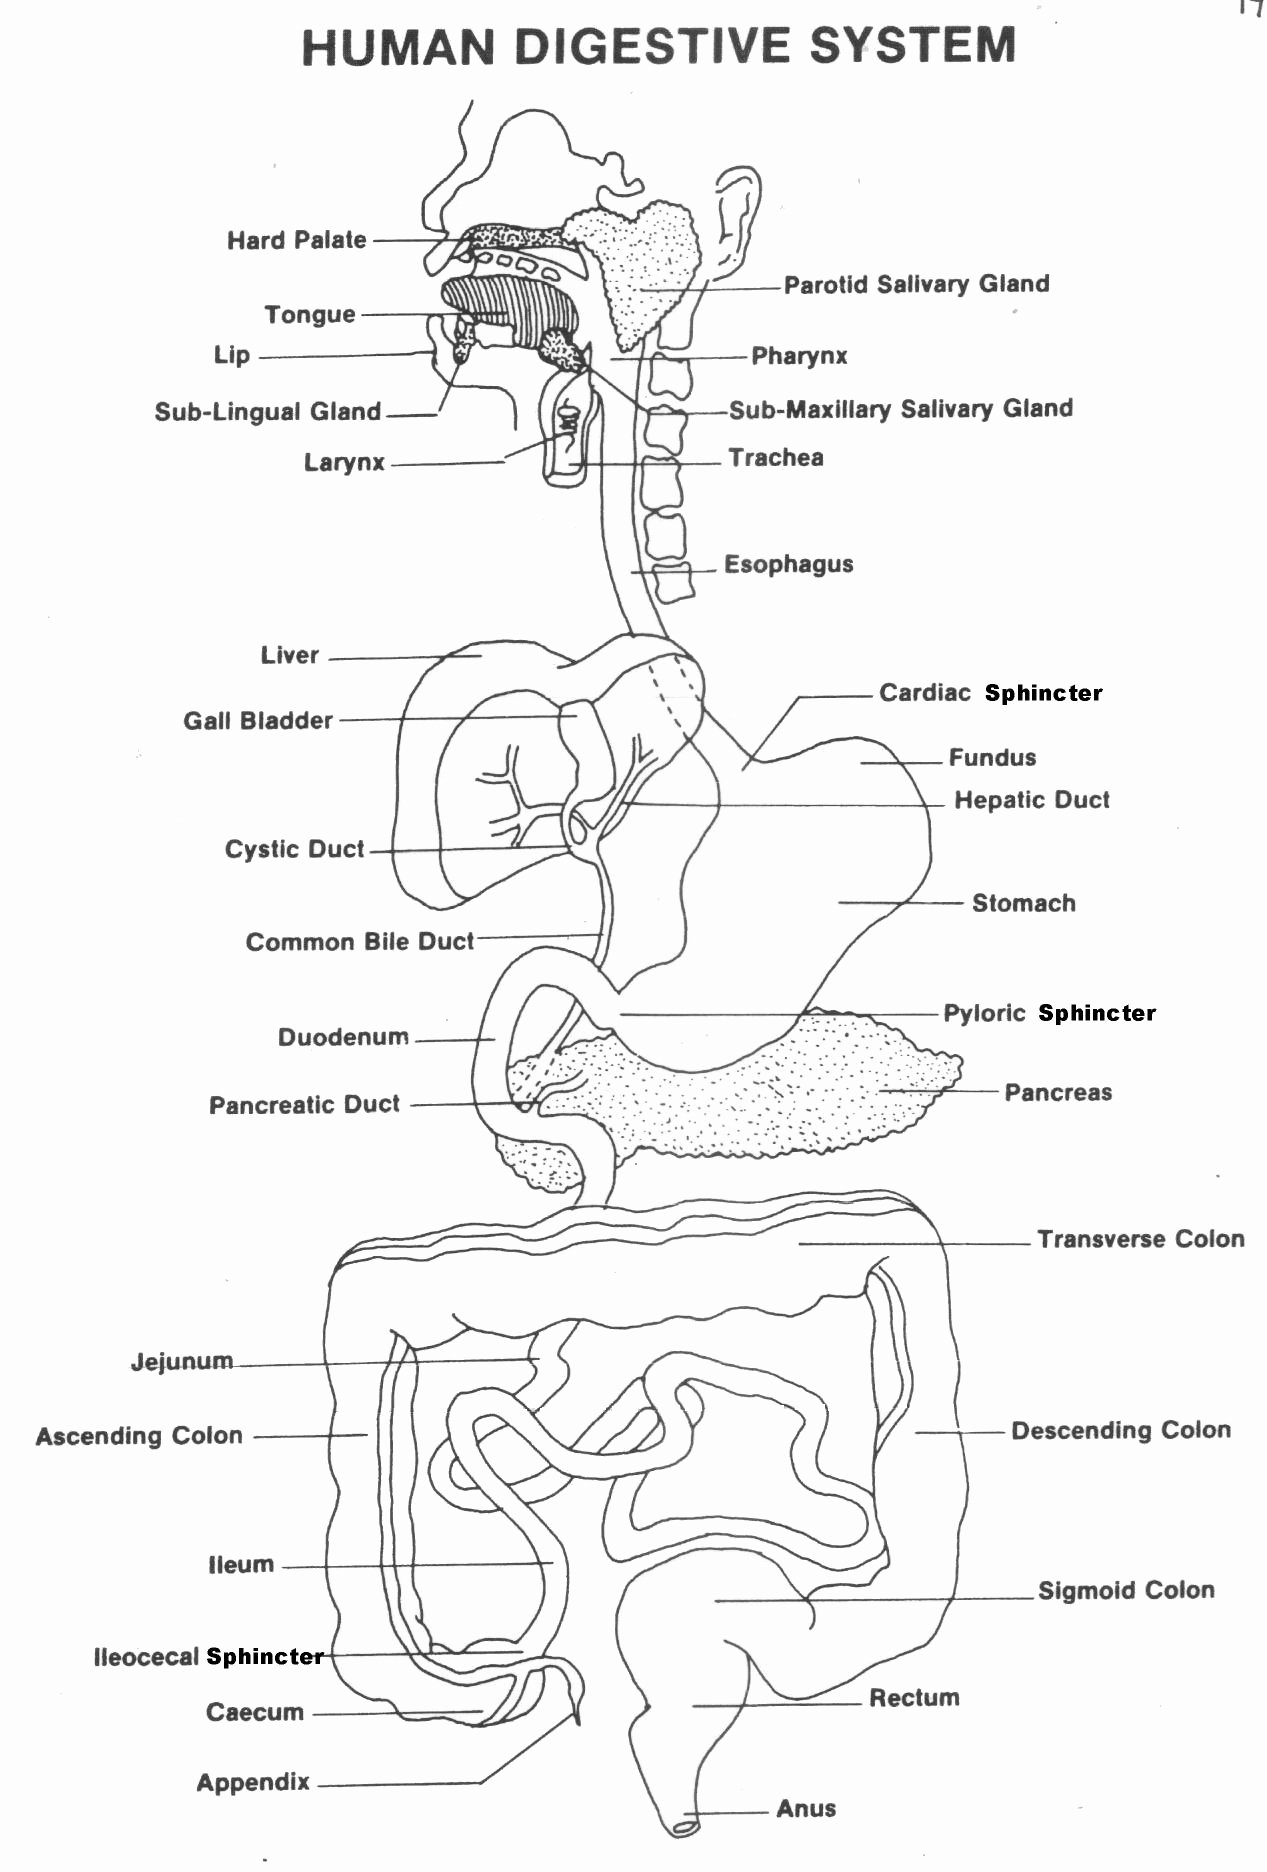 Digestive System Worksheet High School New Picture Of Parts Of Human Digestive System Human Digestive